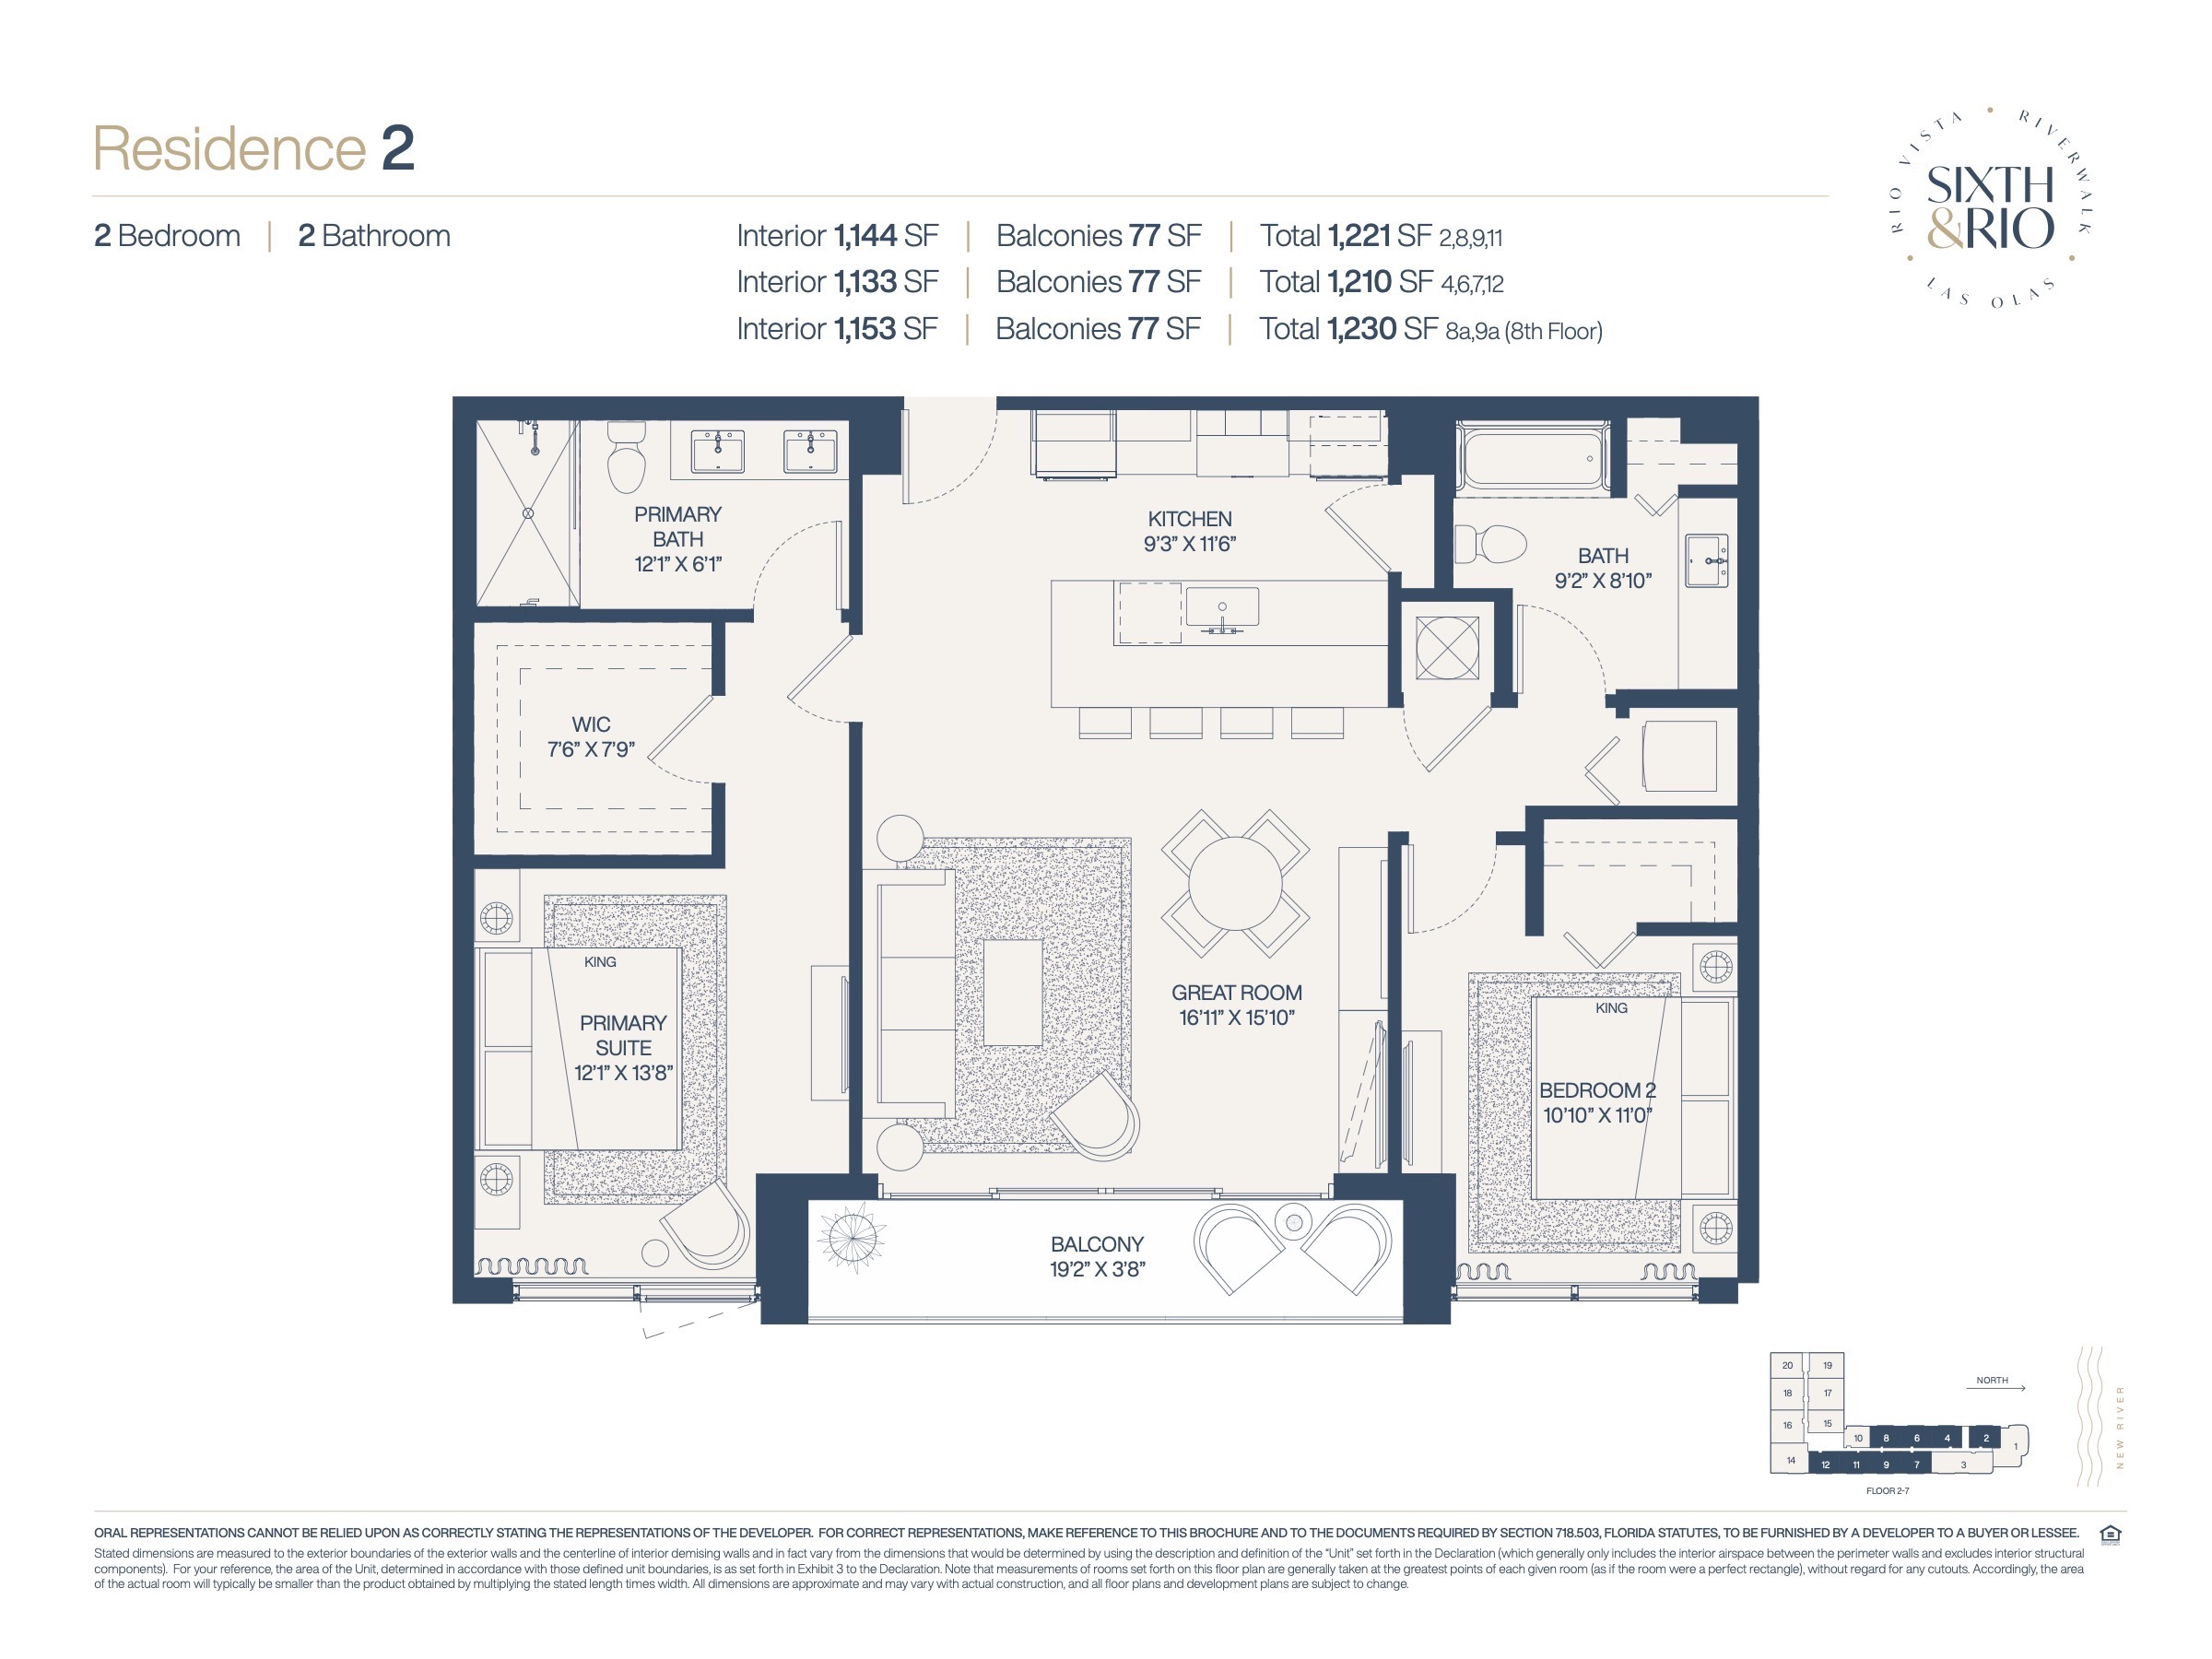 Floor Plan for Sixth & Rio Fort Lauderdale Floorplans, Residence 2